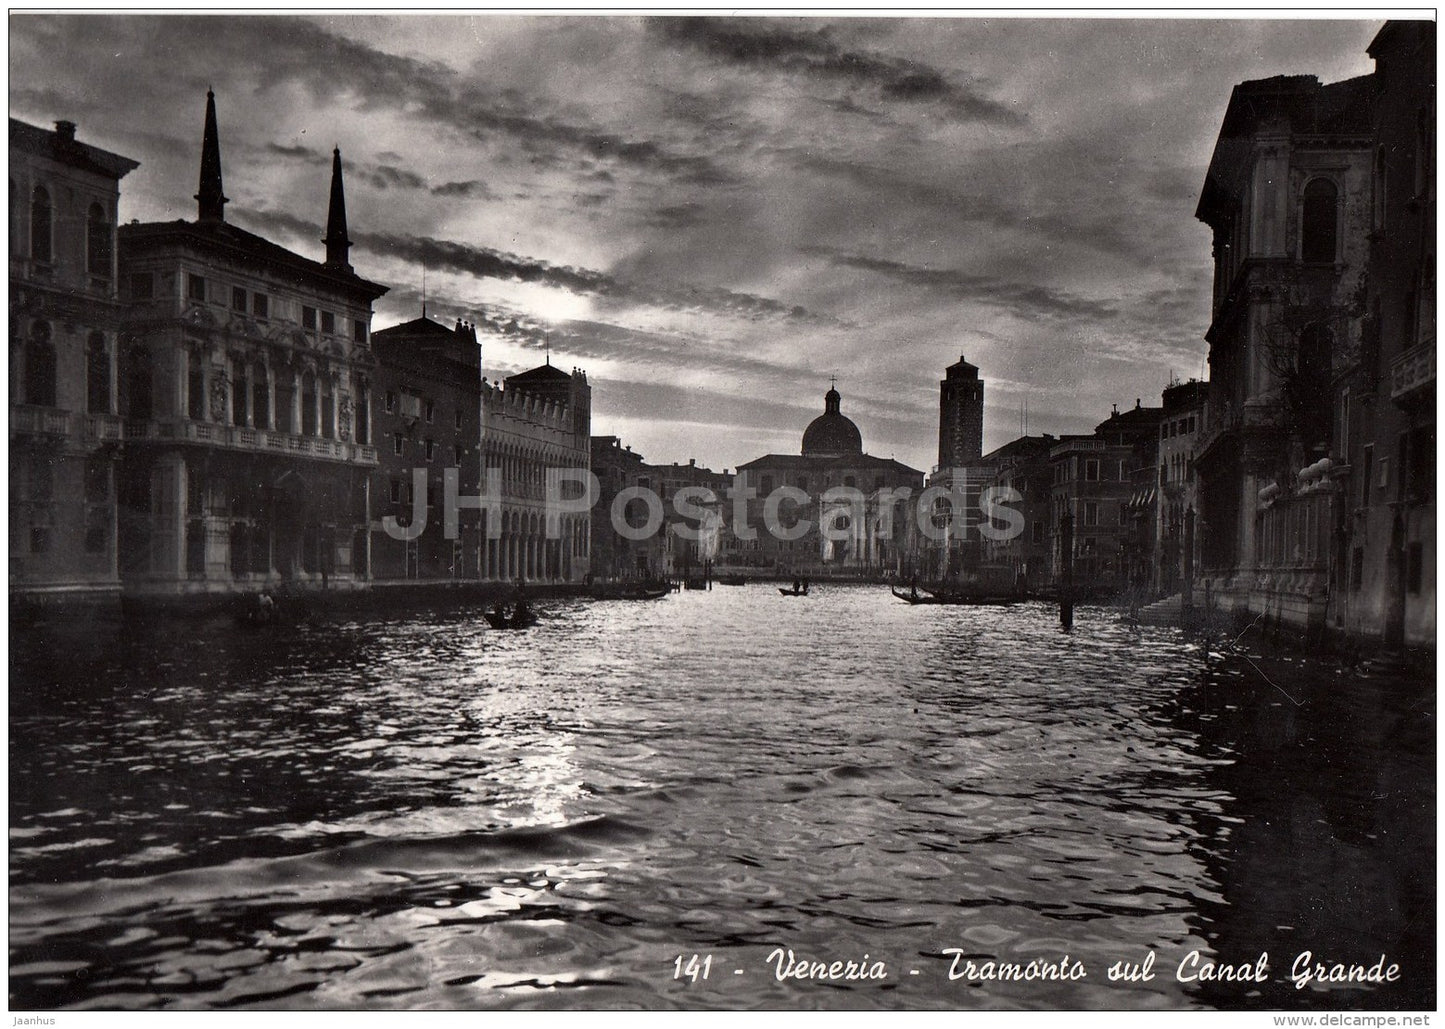 Canal Grande - sunset - 141 - Venice - Venezia - Italy - Italia - unused - JH Postcards